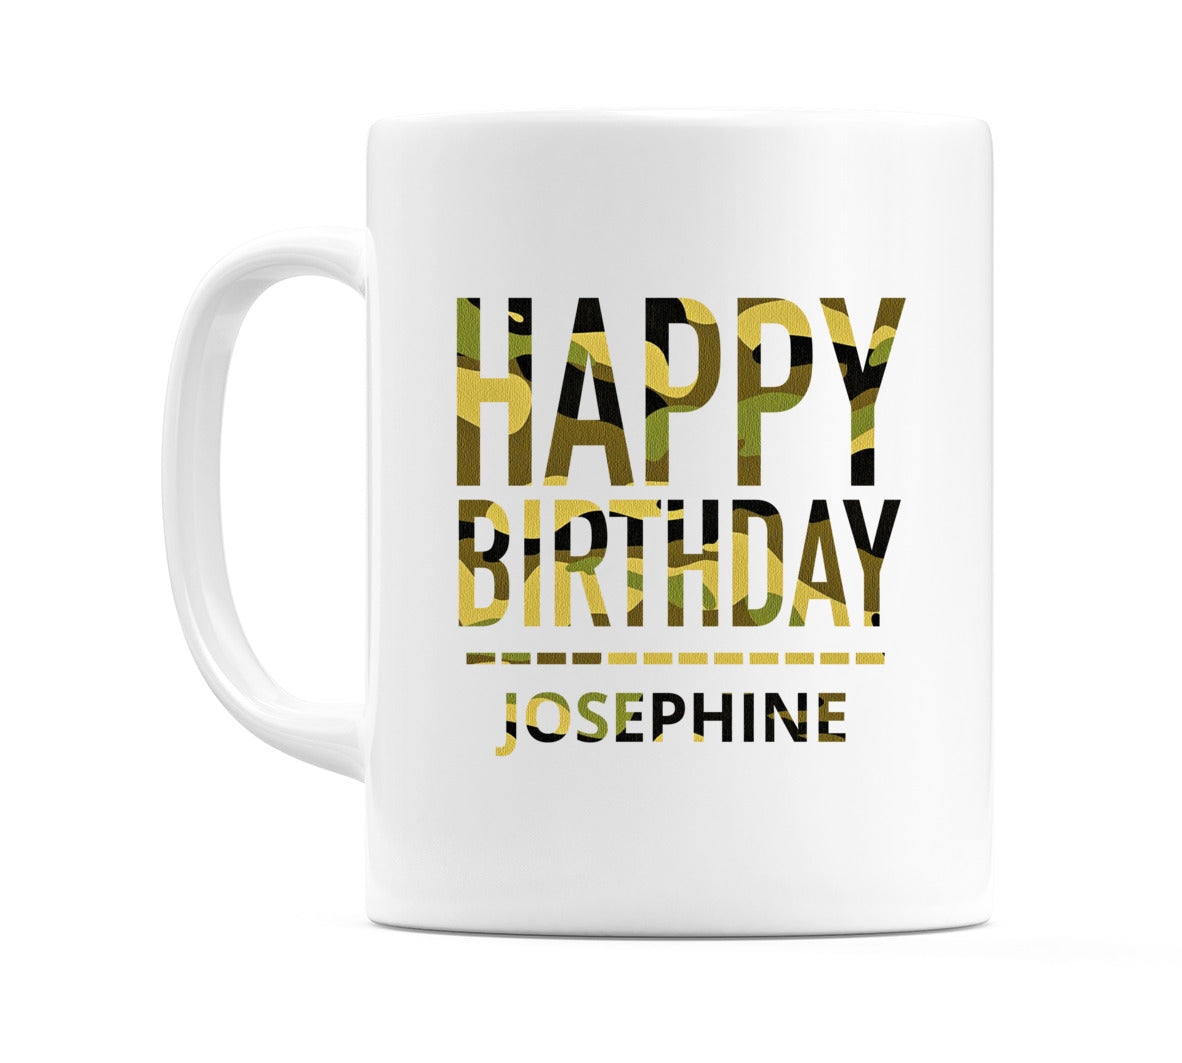 Happy Birthday Josephine (Camo) Mug Cup by WeDoMugs